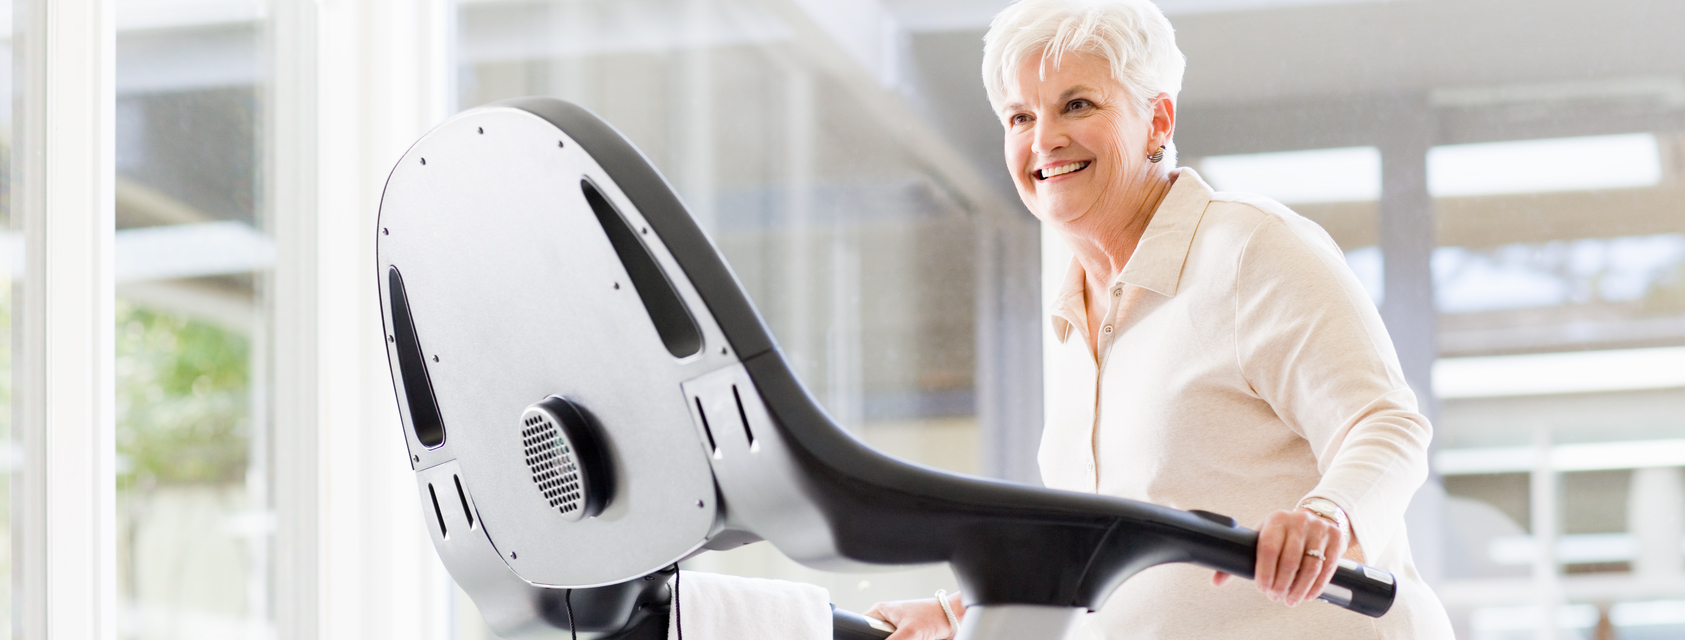 Mature woman on a treadmill